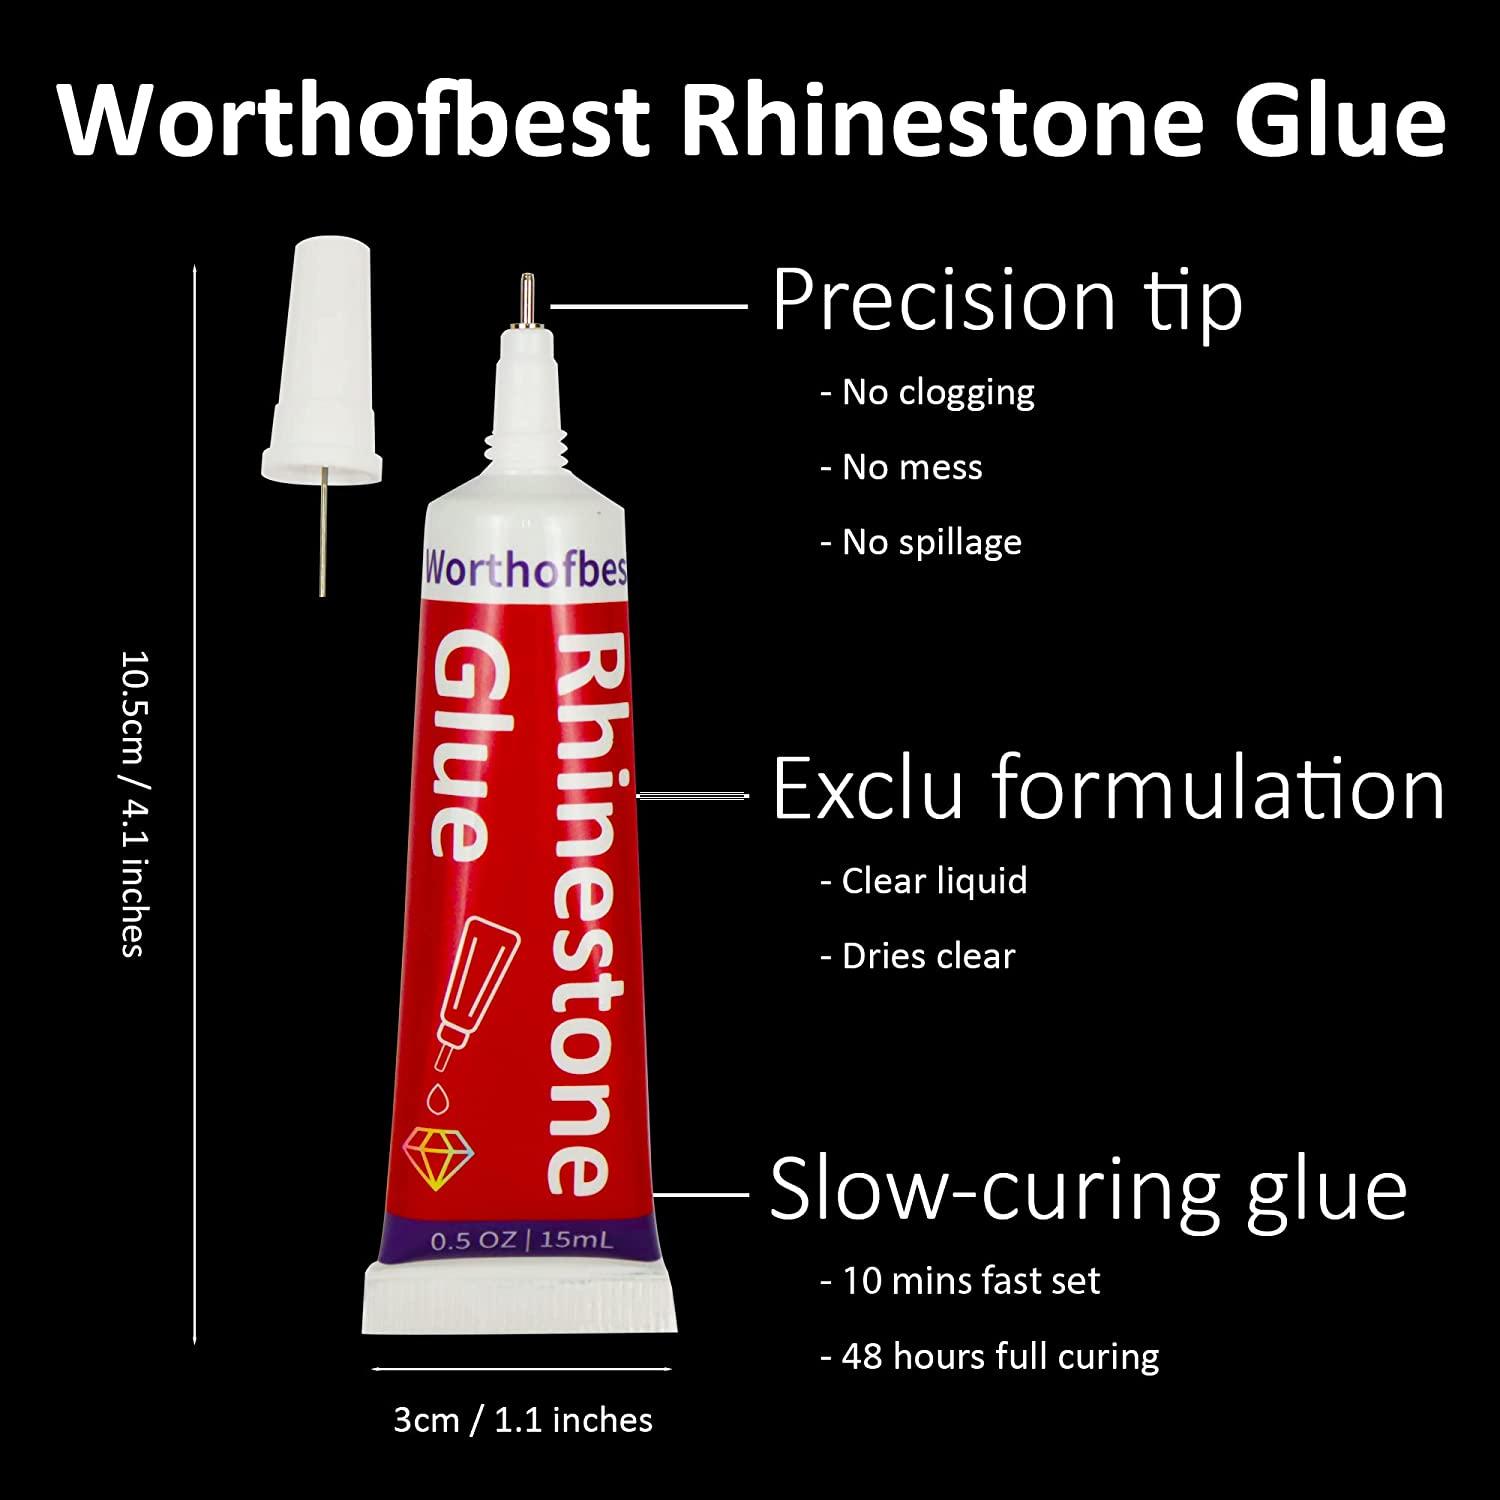 Glue for Rhinestones on Fabric Offers Several Choices - Rhinestones Etc